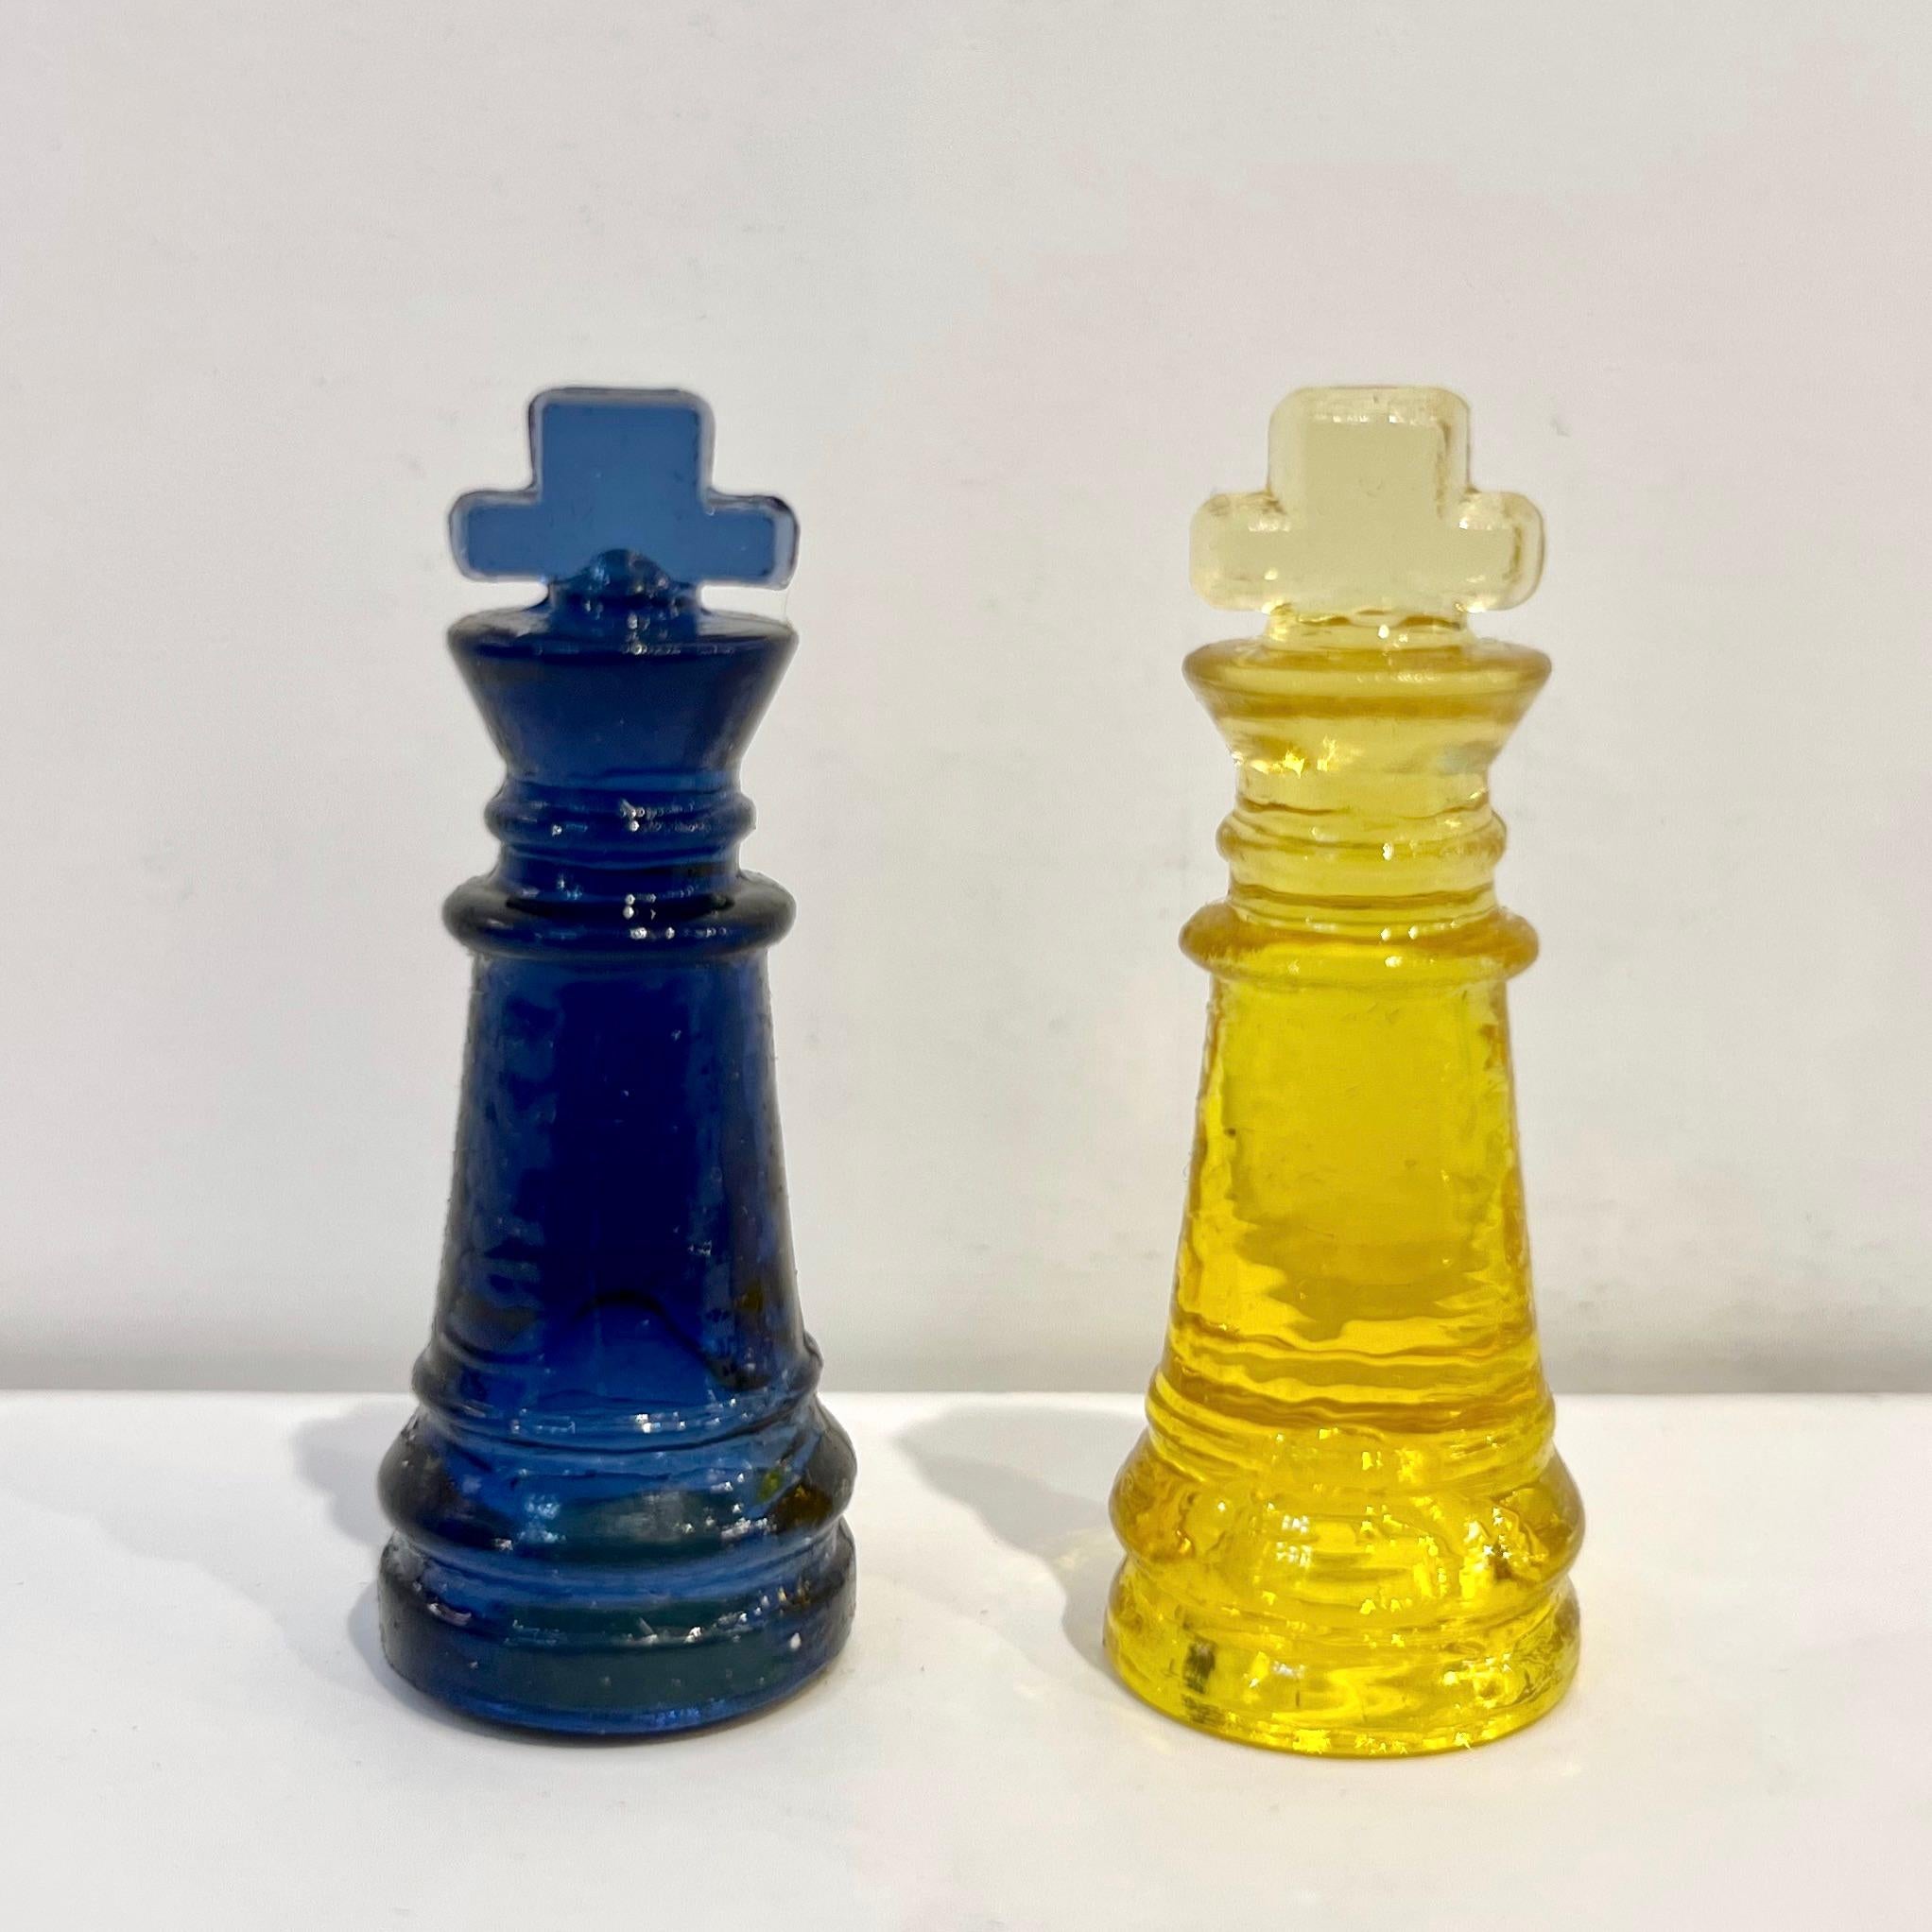 Italian Contemporary Minimalist Blue & Yellow Murano Glass Chess Set on Mirrored Board